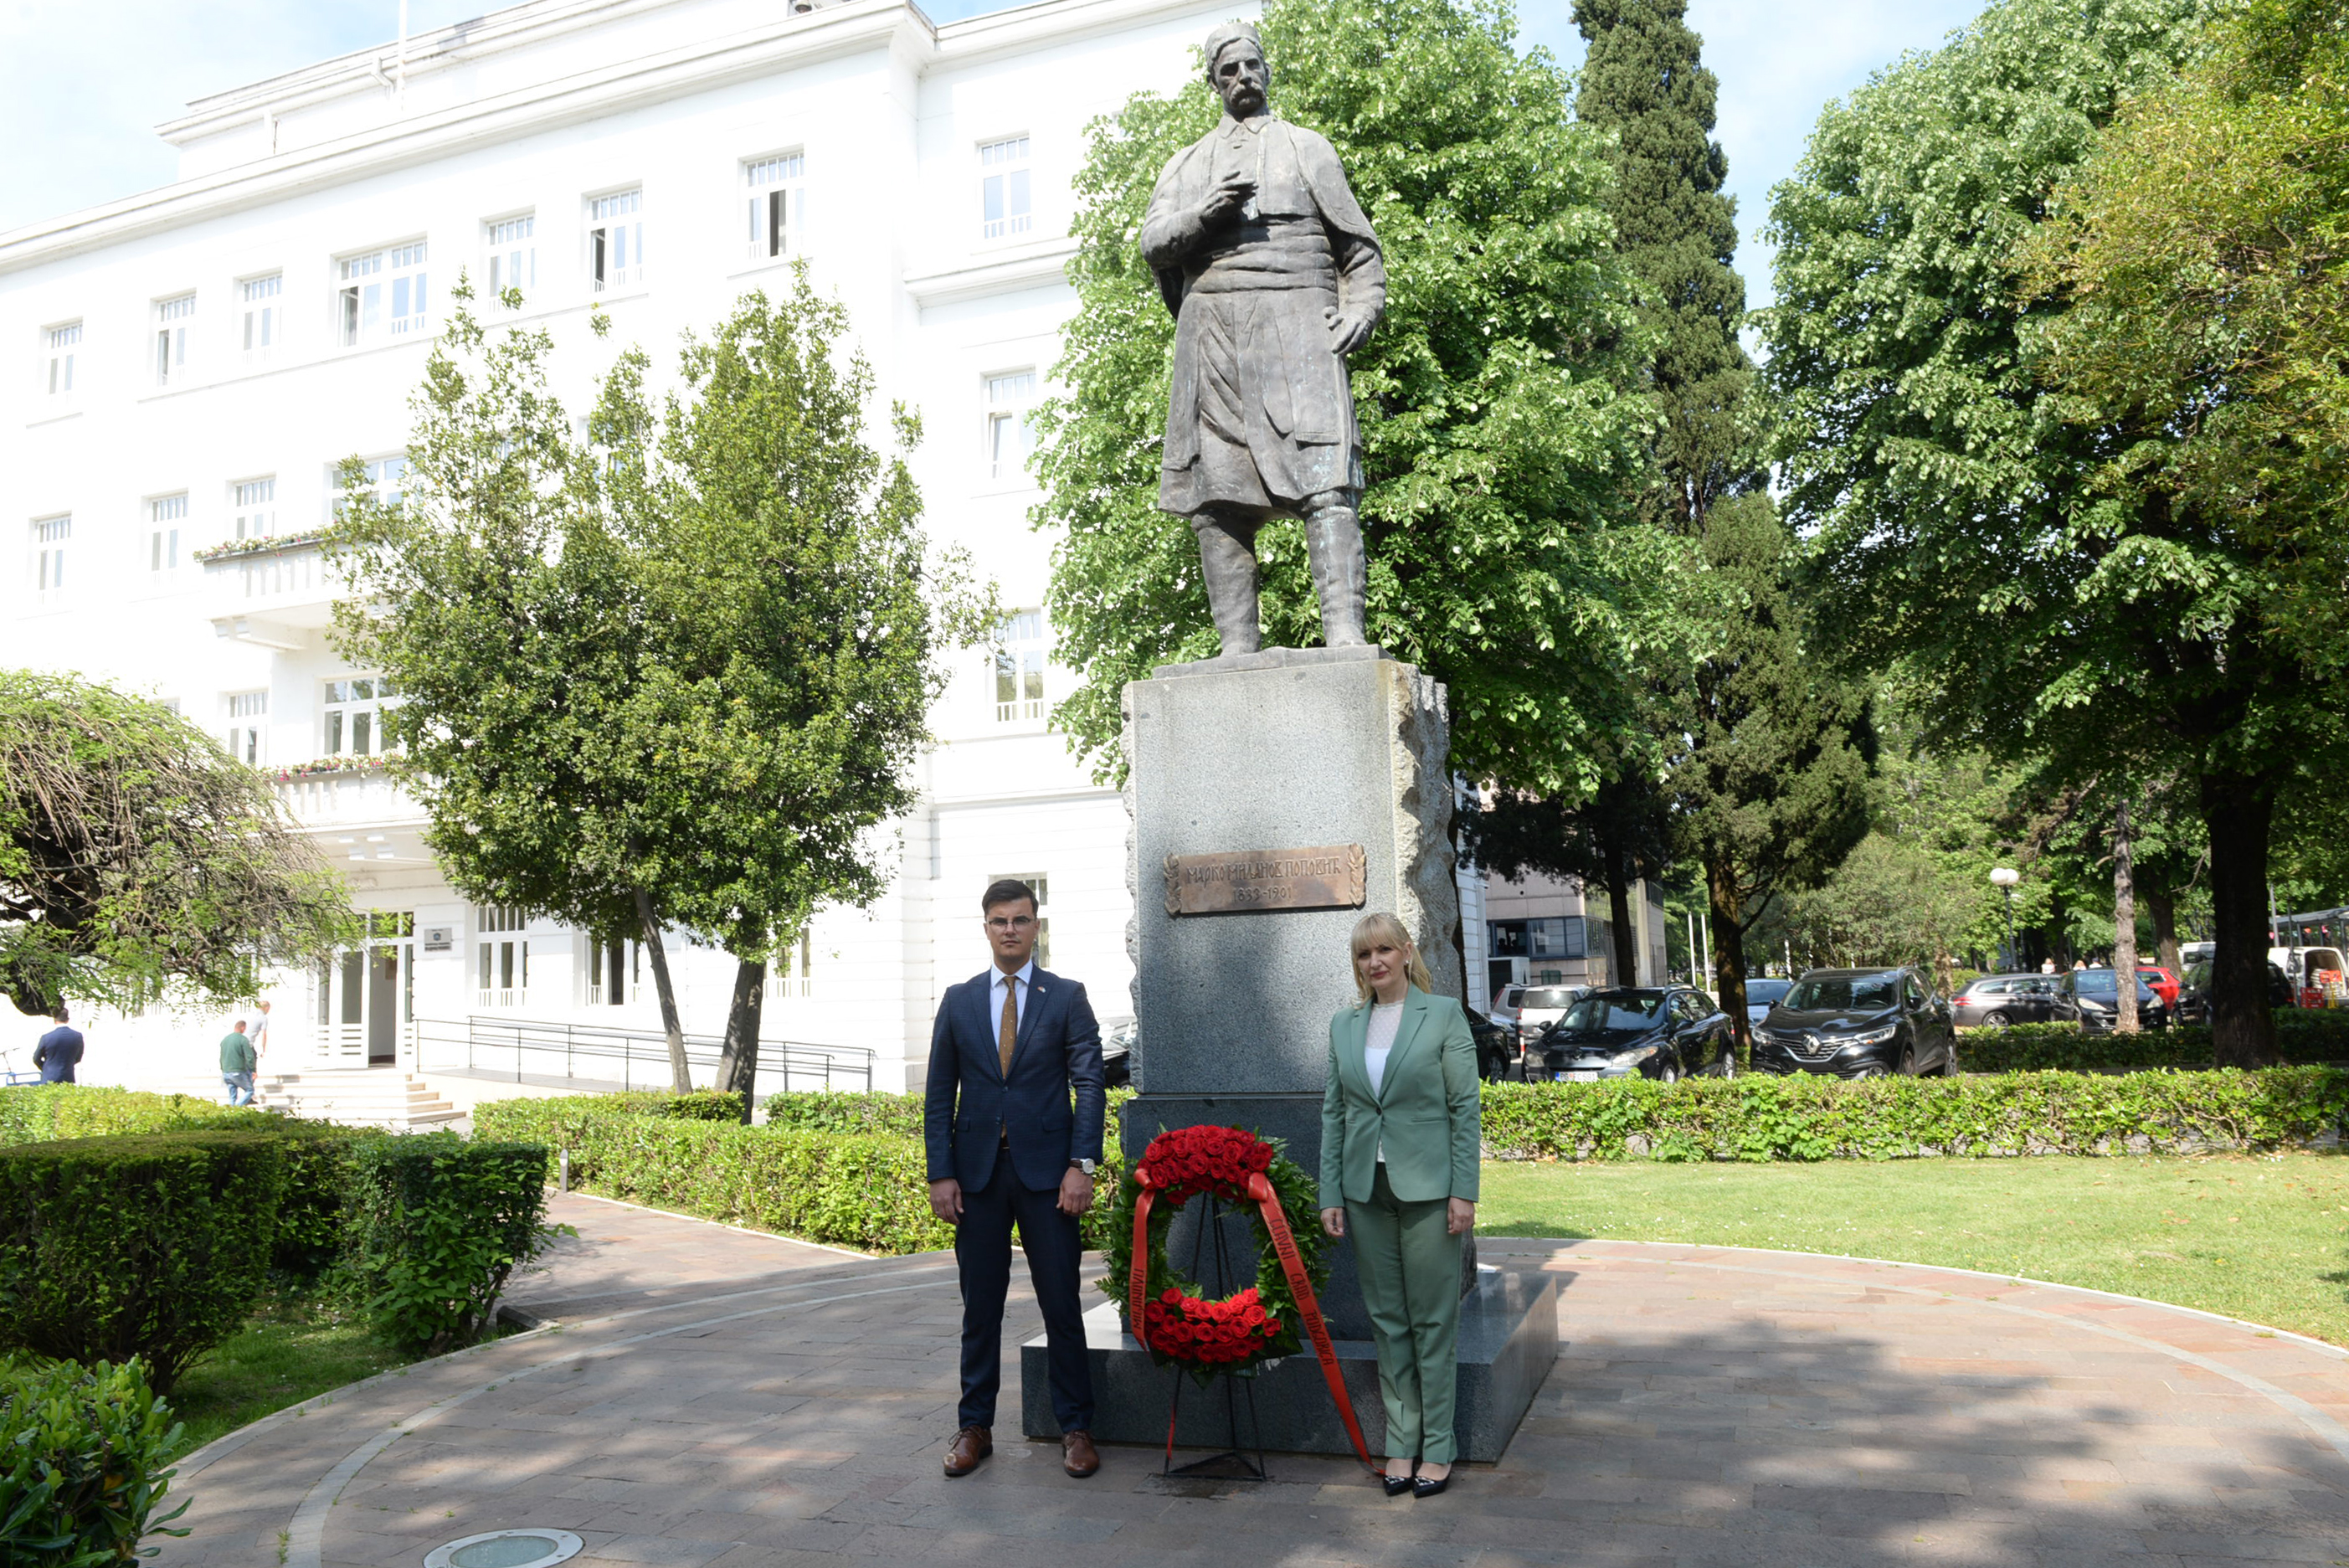 Položen vijenac na spomenik Marku Miljanovu